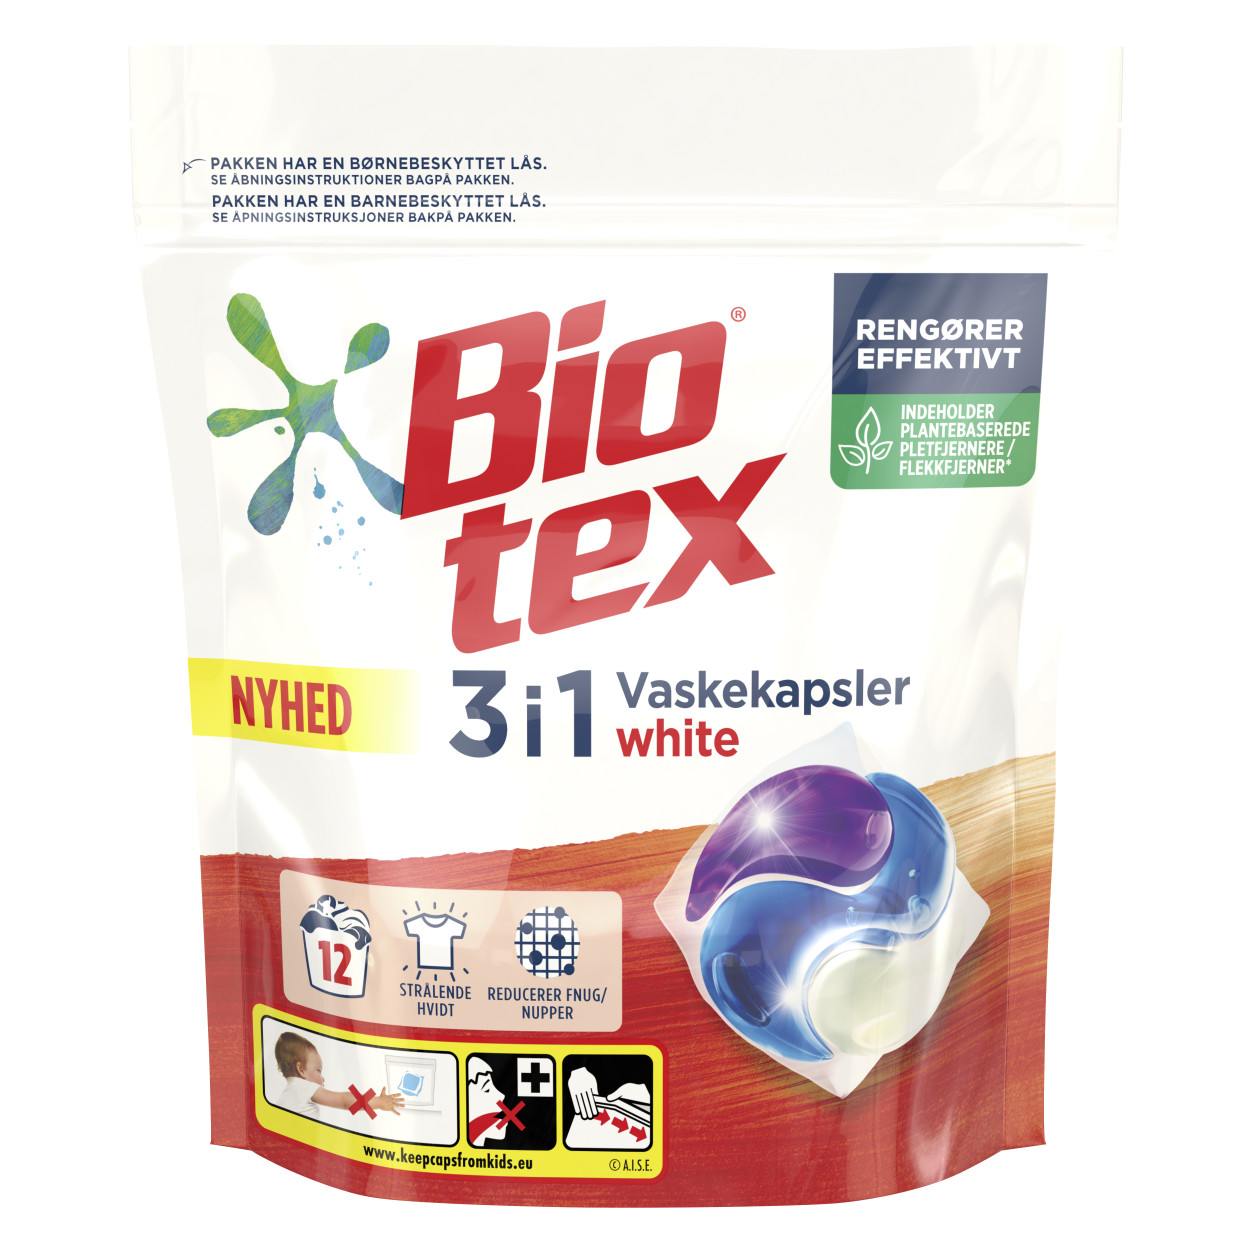 Bio-tex Dual Action Vaskekapsler White packshot 